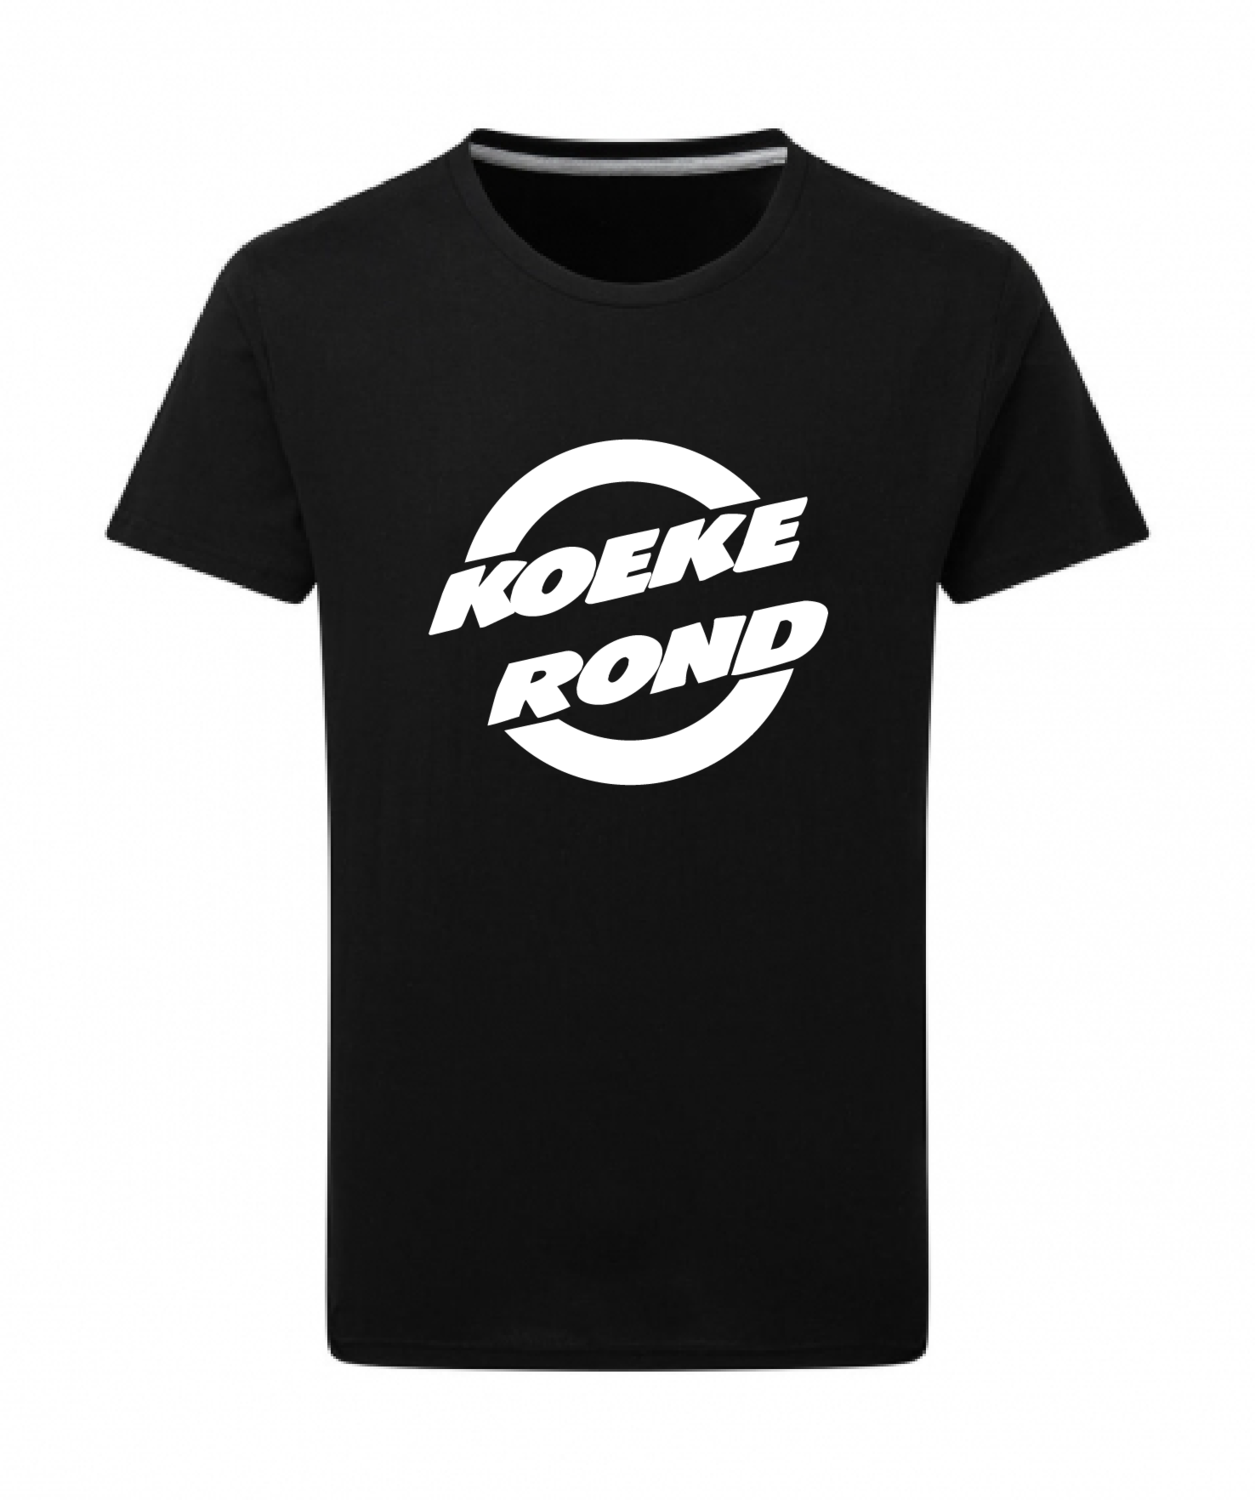 Koeke Rond